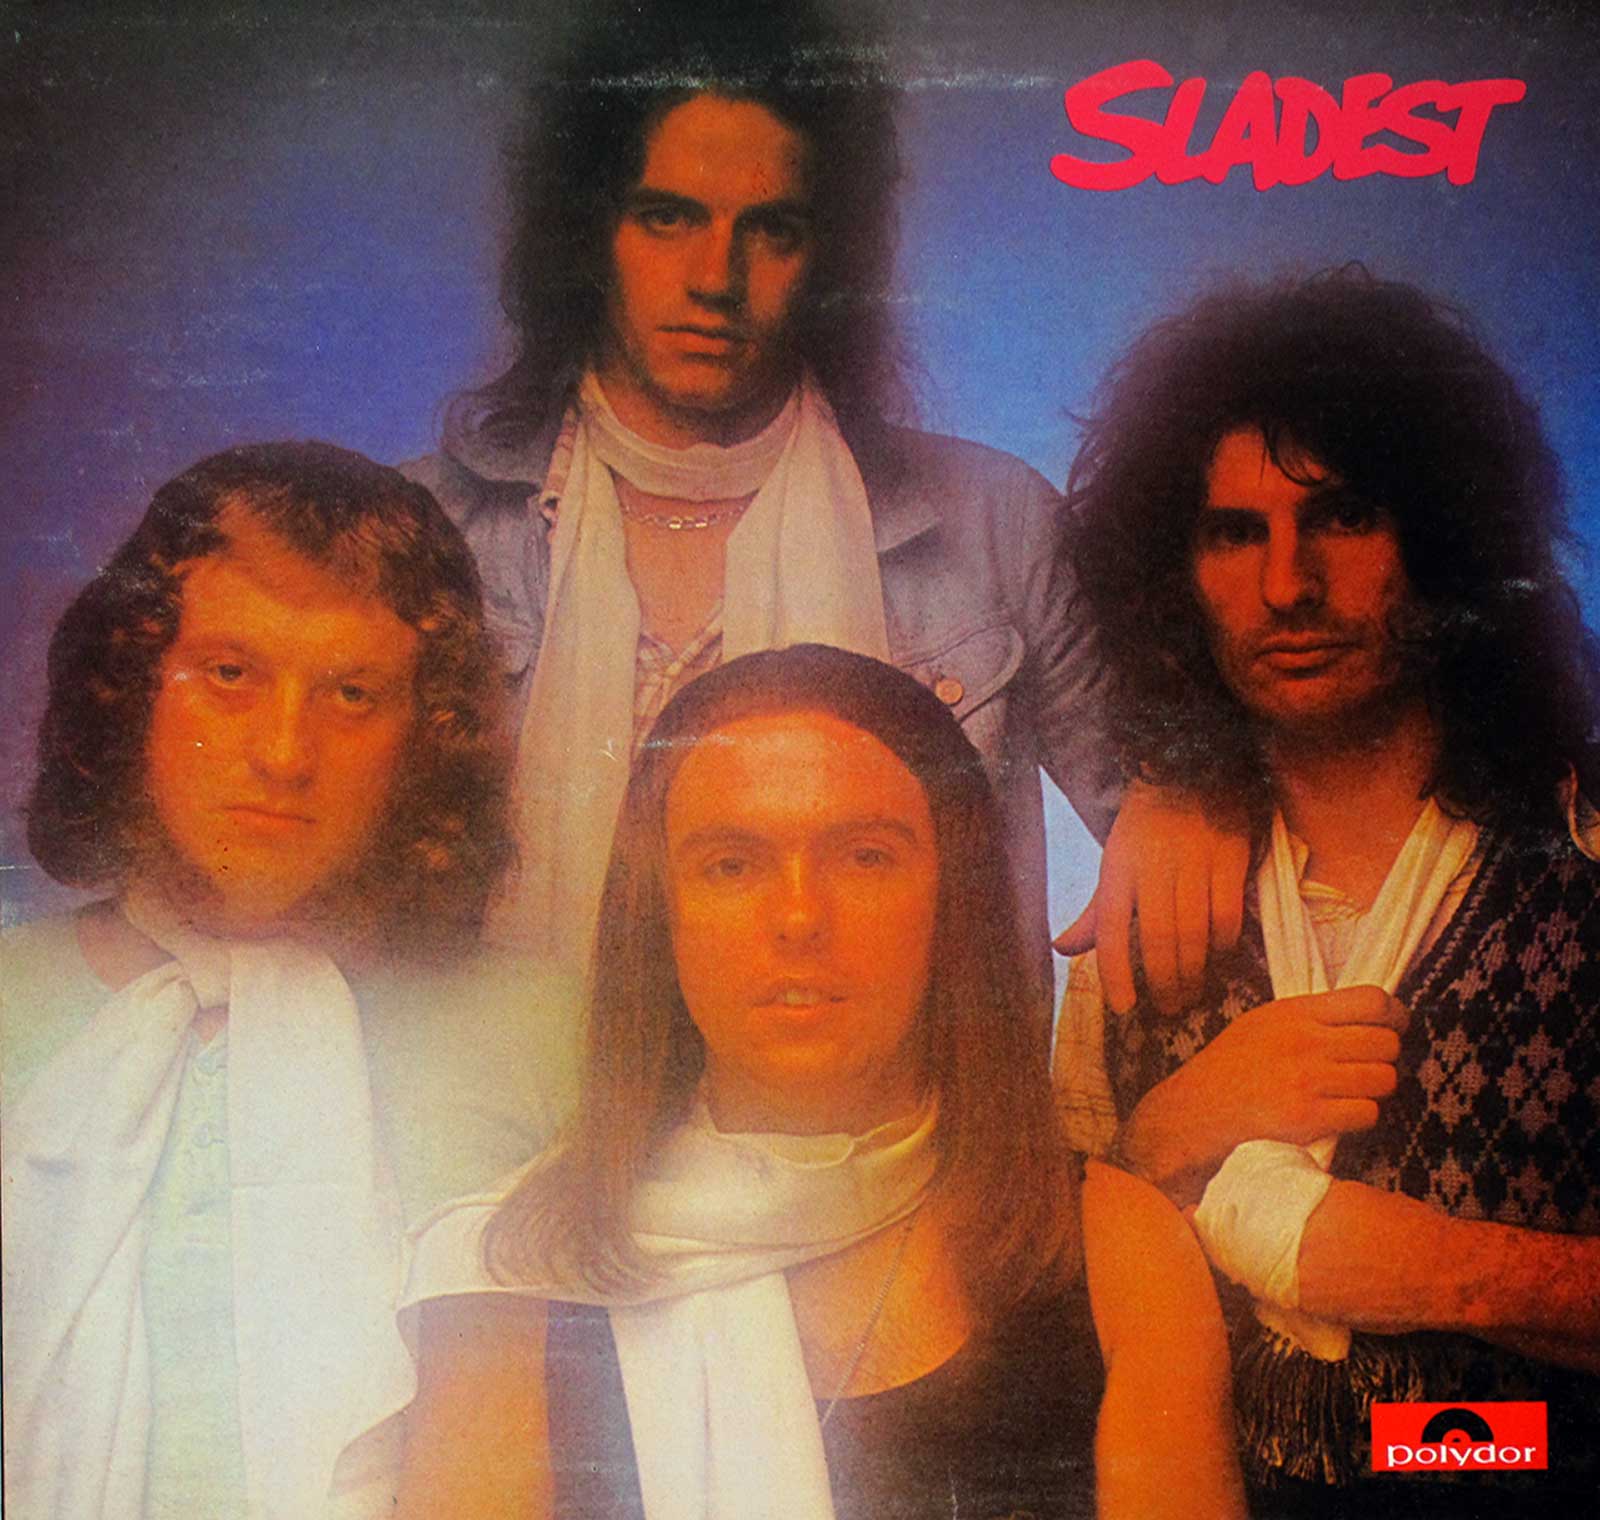 large album front cover photo of: SLADE - Sladest 